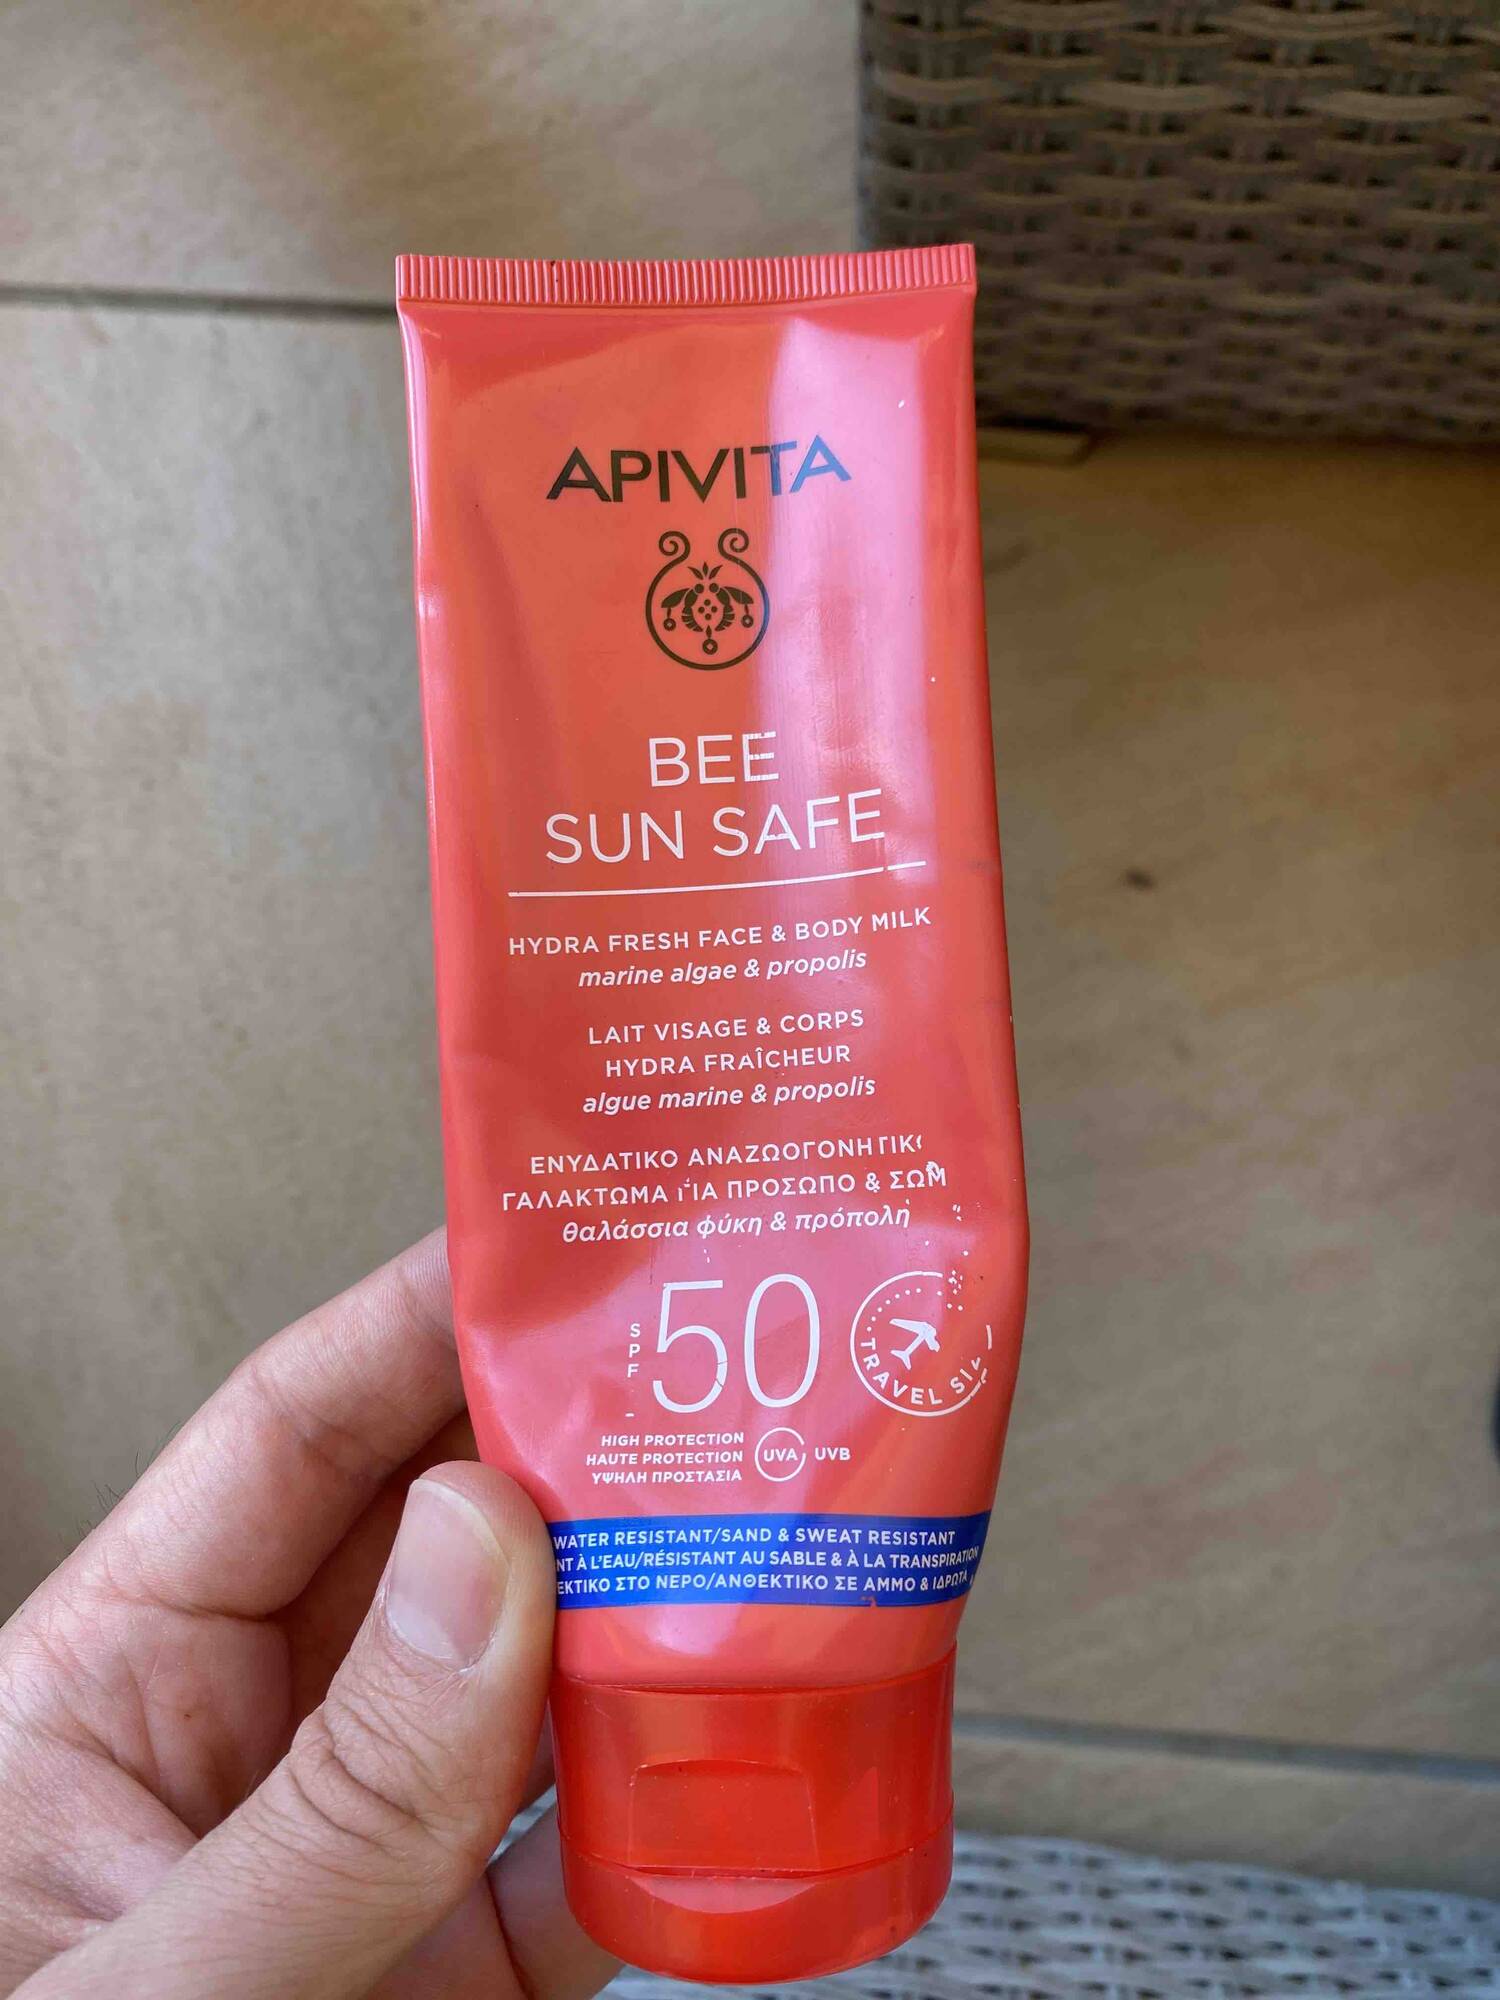 APIVITA - Bee sun safe - Lait visage & corps SPF 50